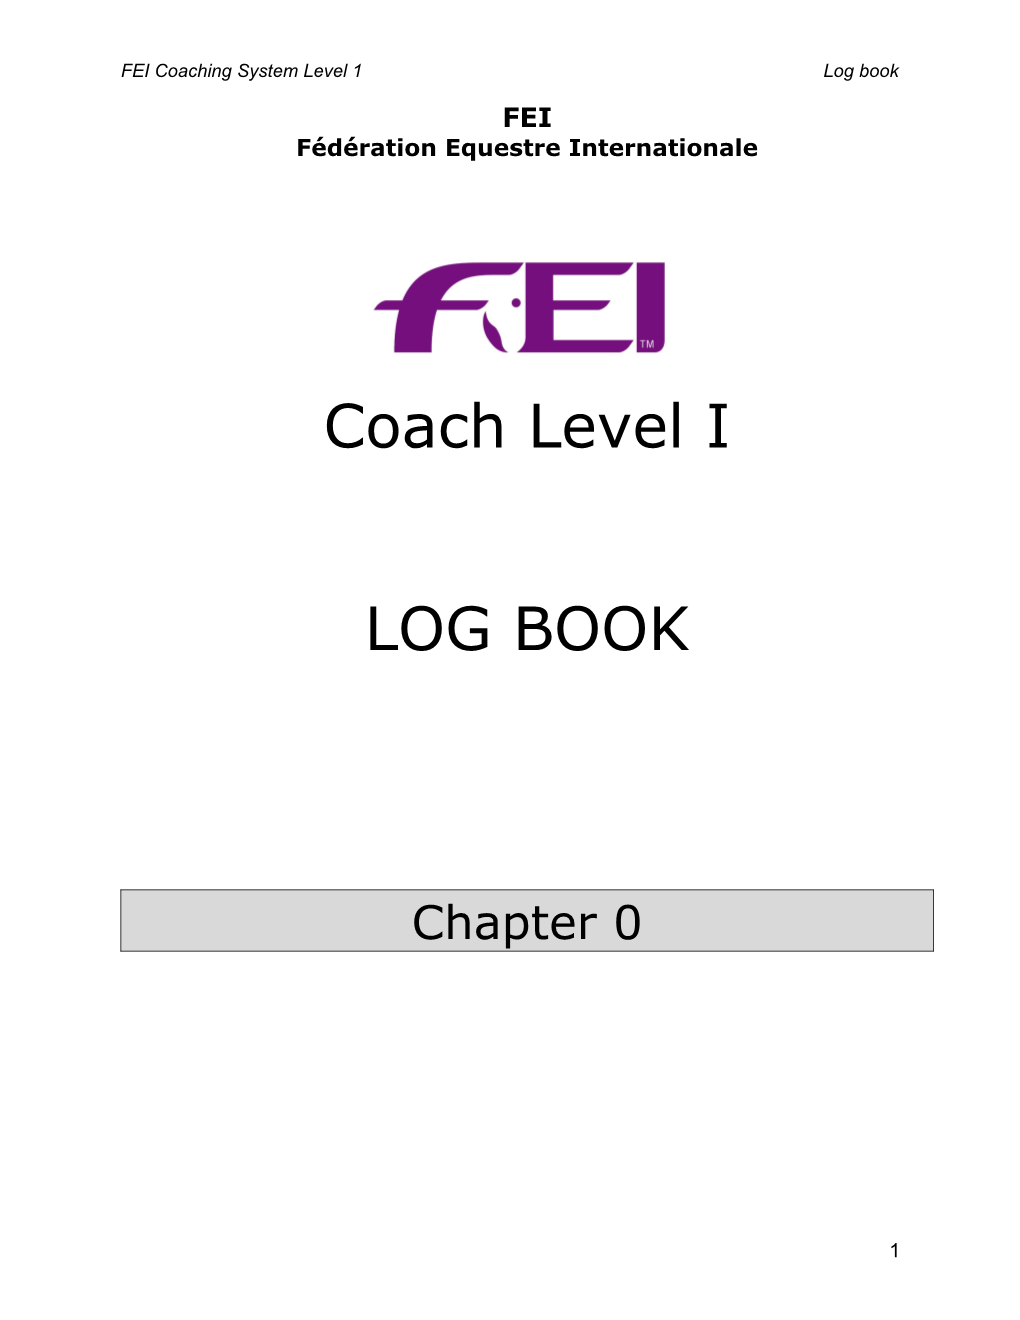 FEI Coaching System Level 1Log Book